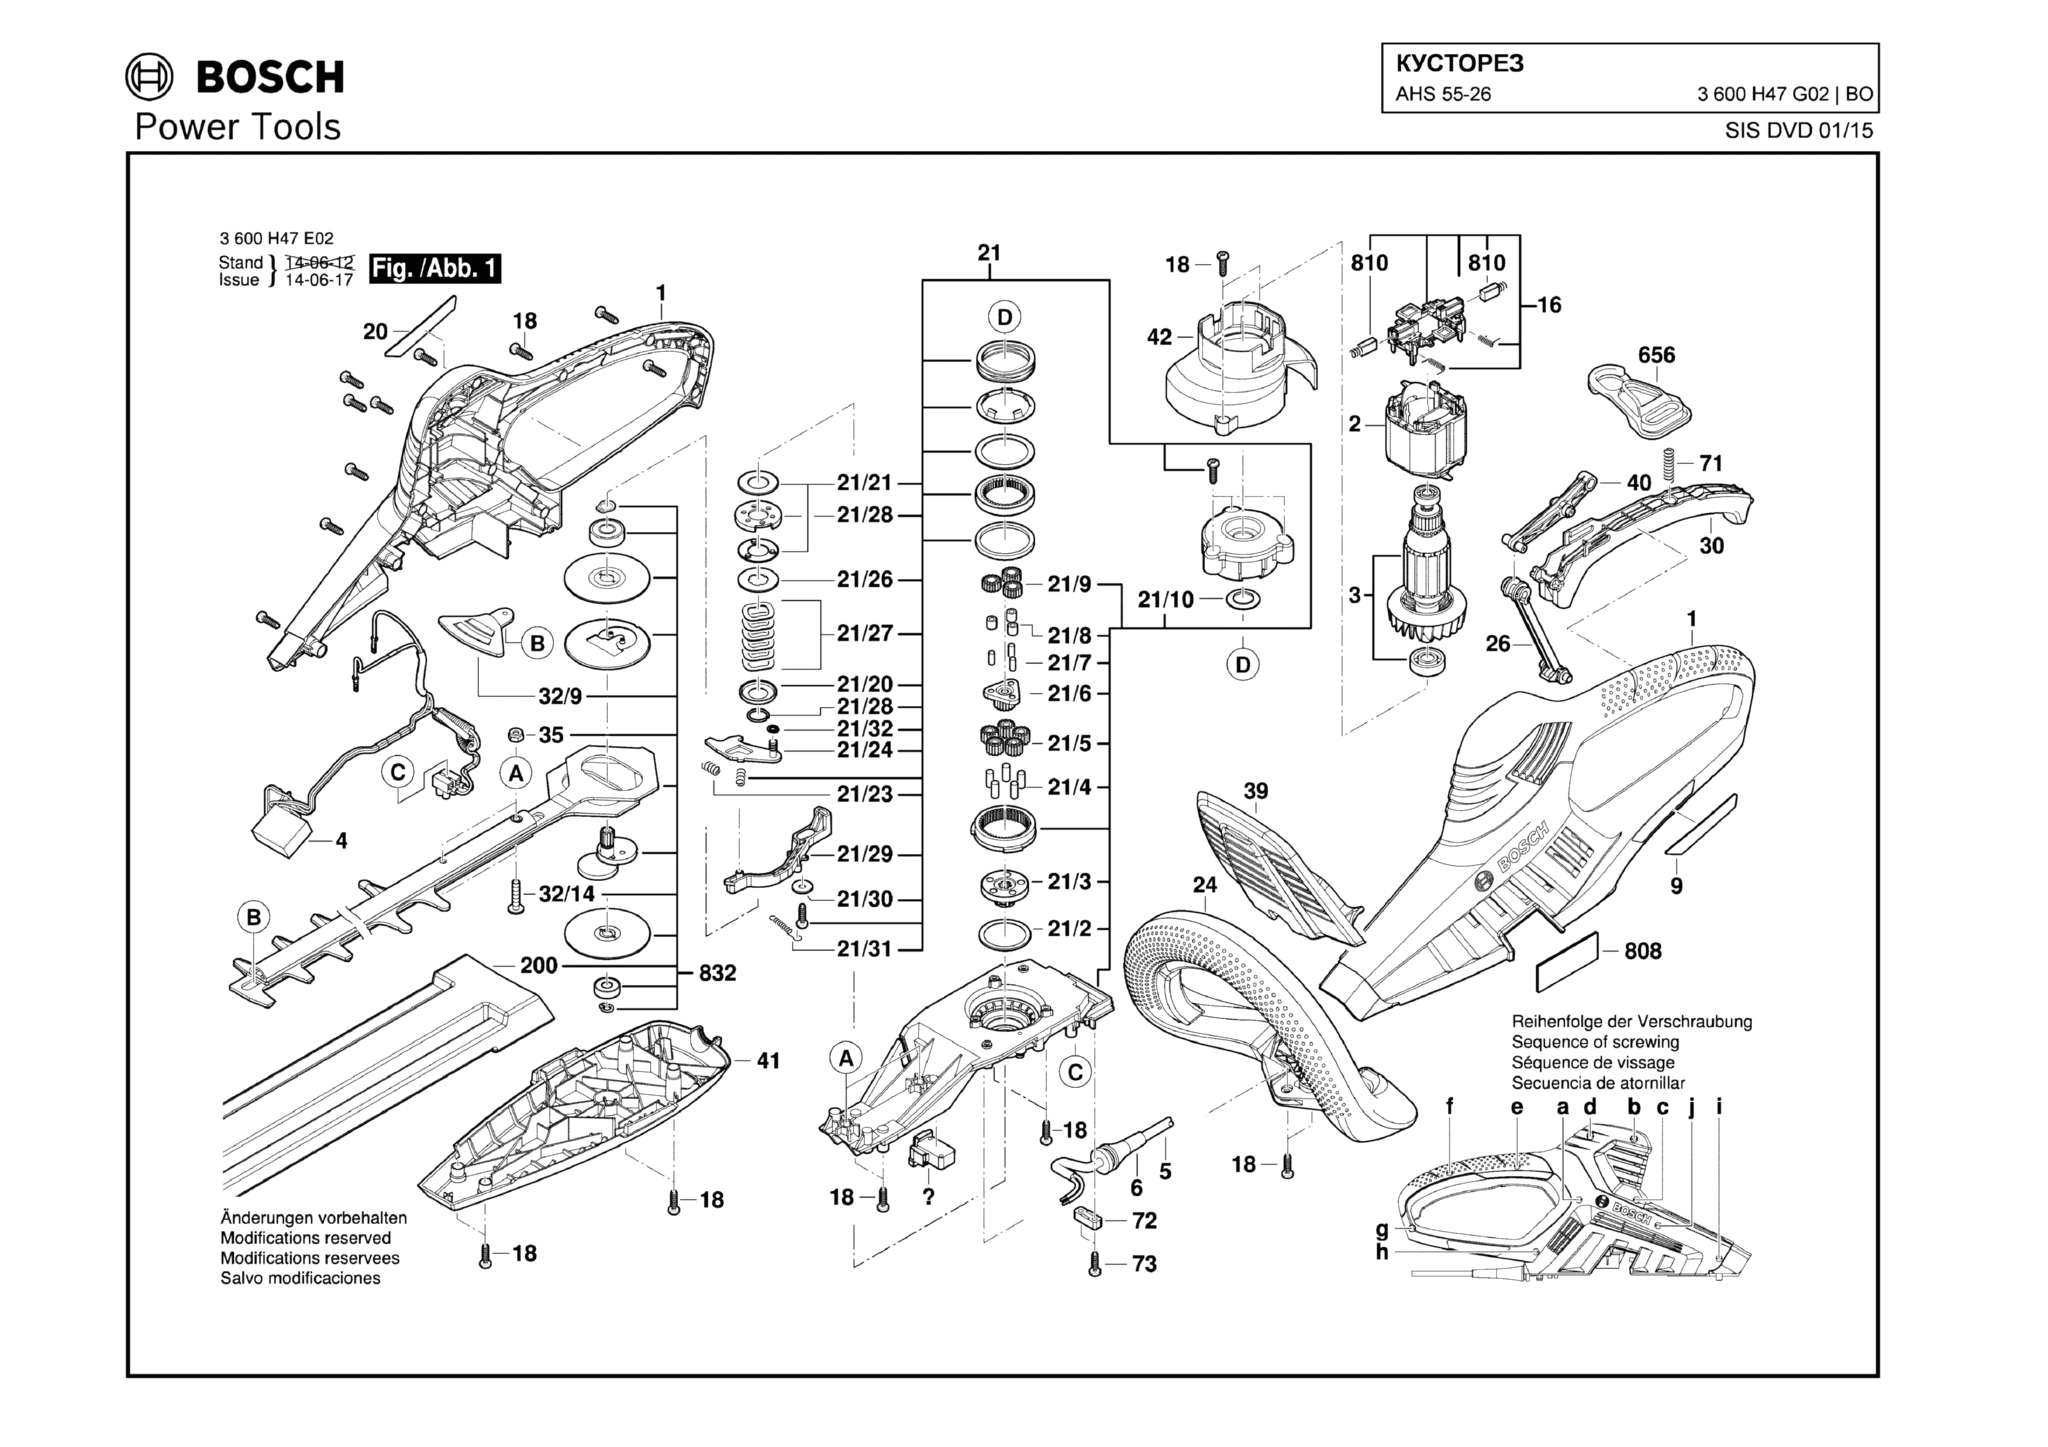 Запчасти, схема и деталировка Bosch AHS 55-26 (ТИП 3600H47G02)